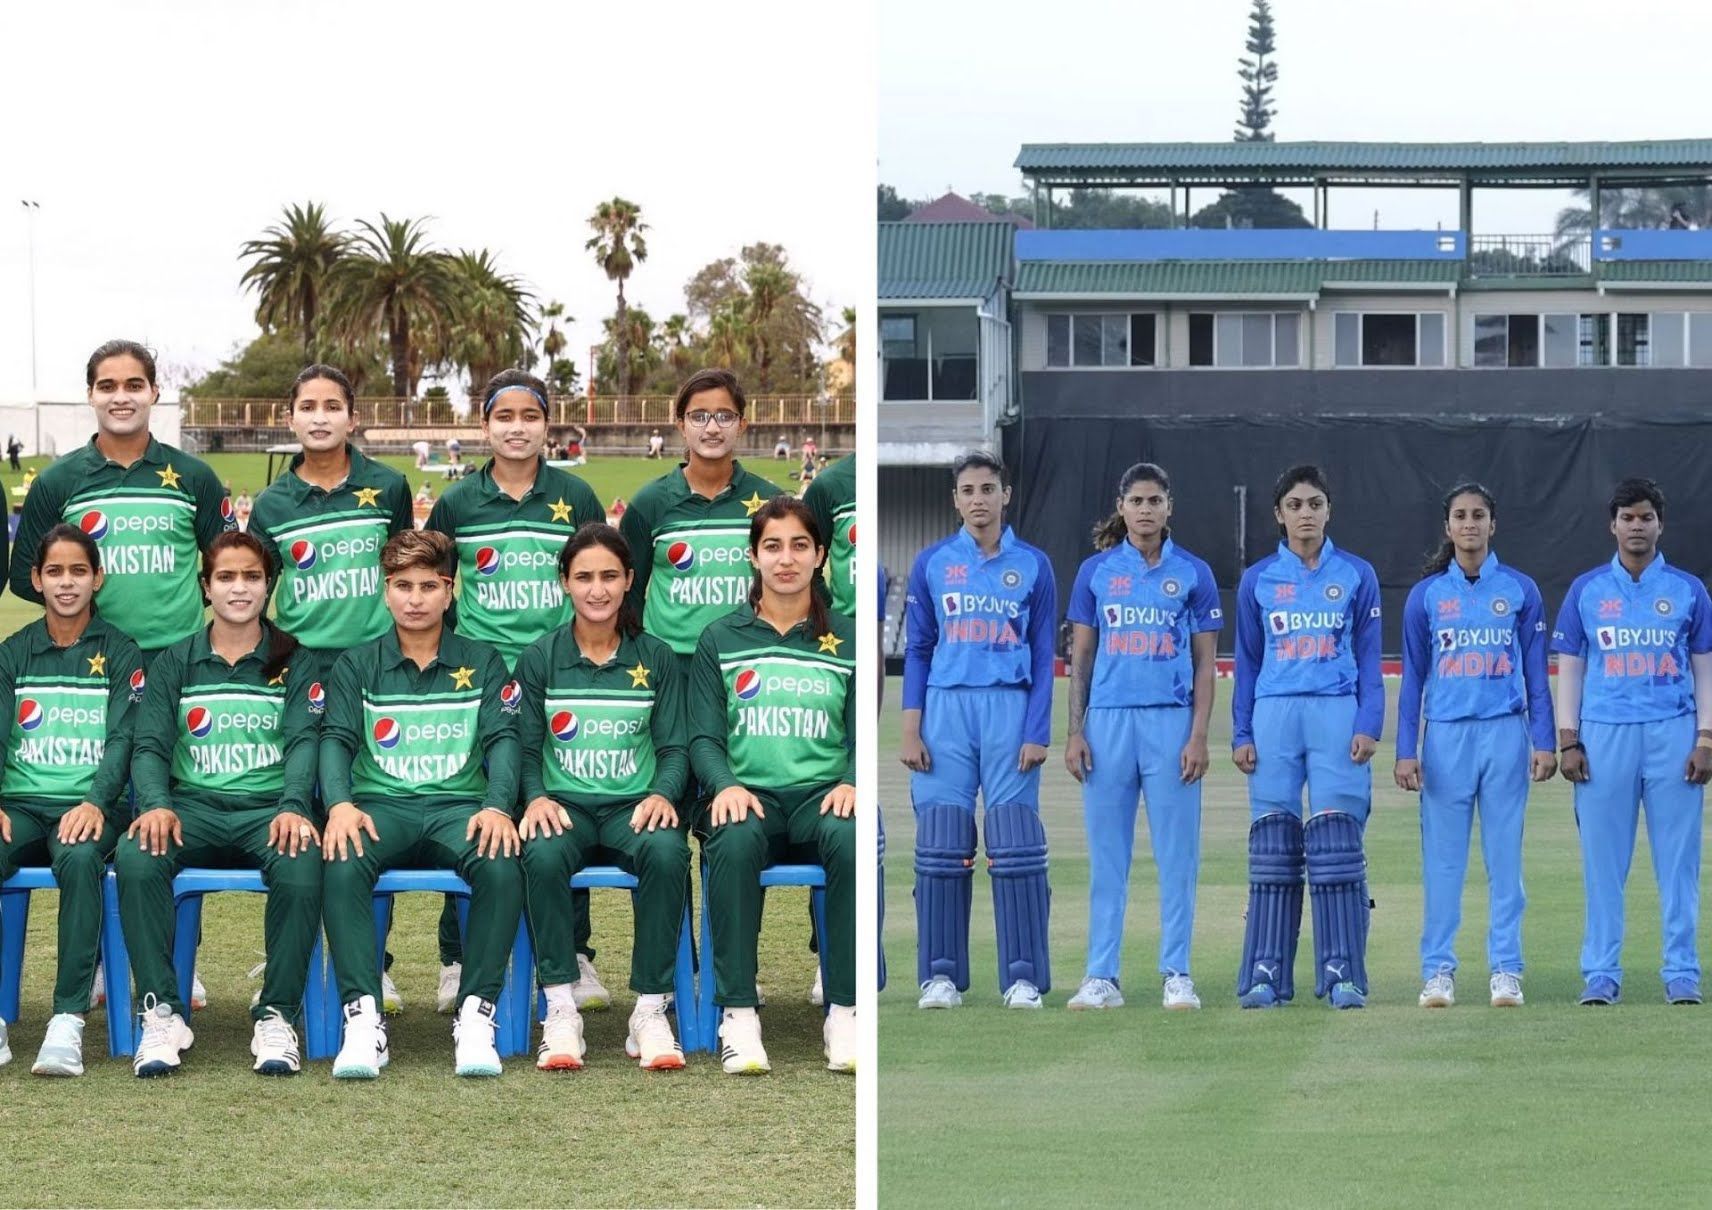 Team India and Team Pakistan will go head-to-head on Sunday 